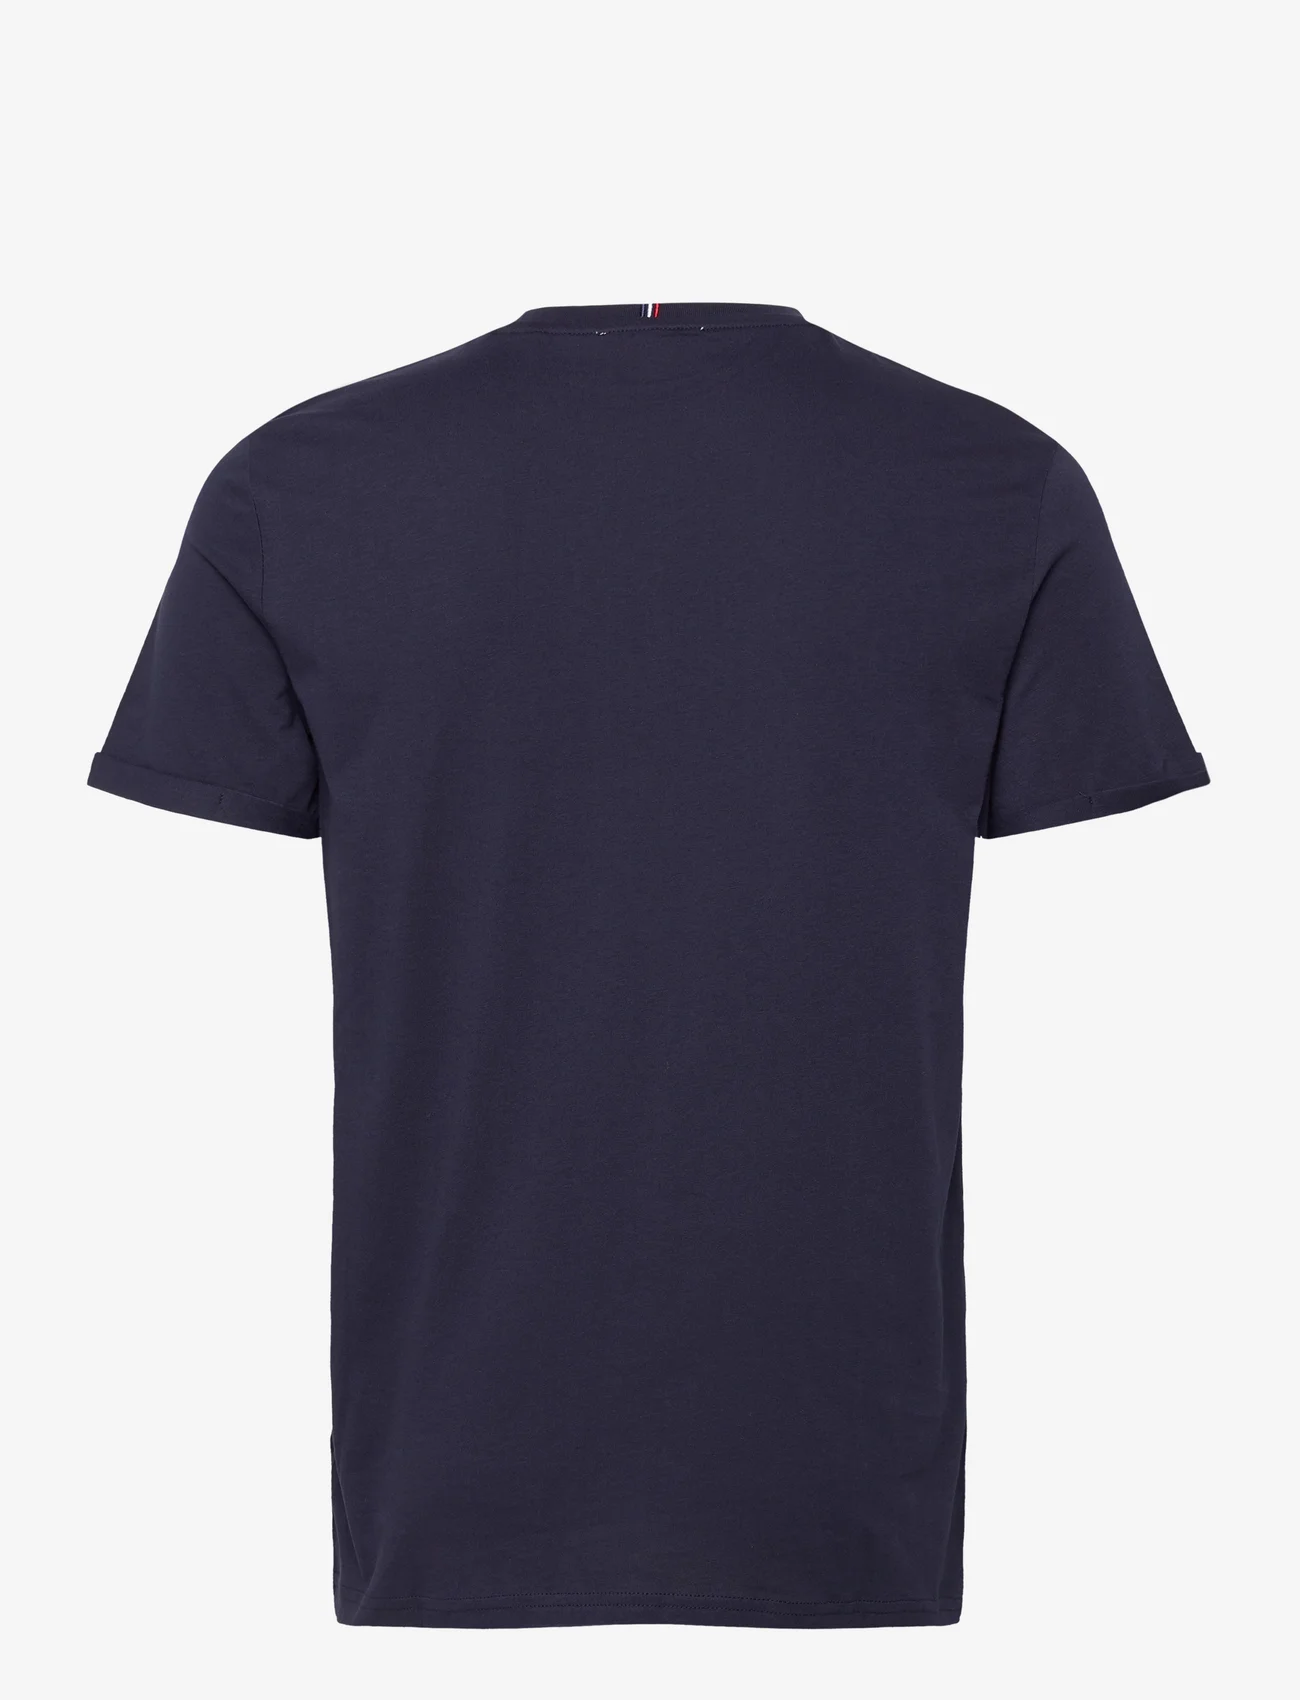 Les Deux - Les Deux II T-Shirt 2.0 - t-krekli ar īsām piedurknēm - dark navy/platinum - 1